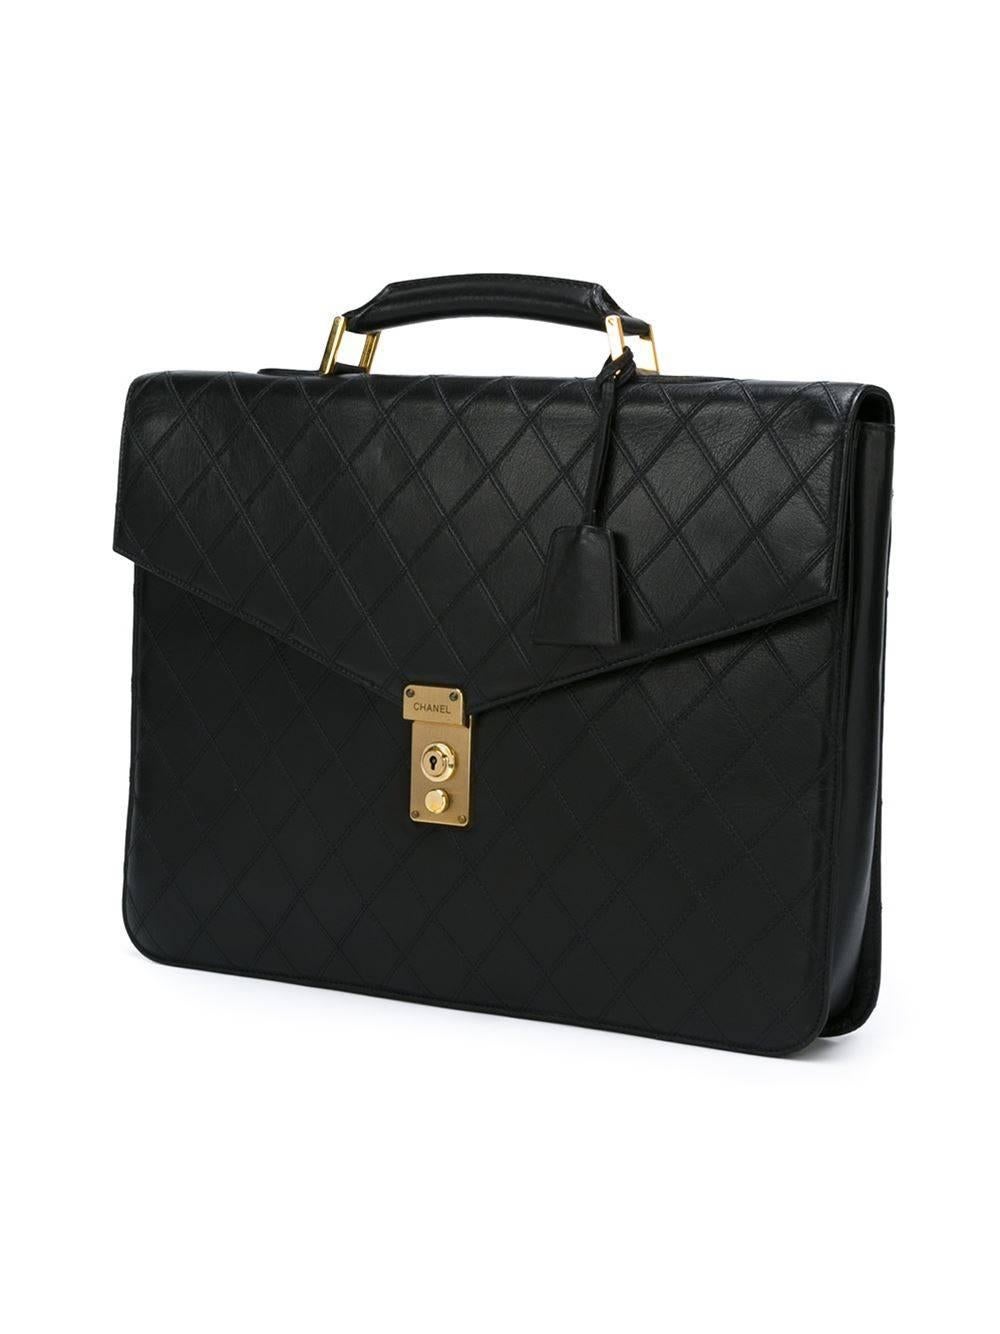 Chanel Black Leather Top Handle Satchel Men's Travel Carryall Briefcase Bag 1